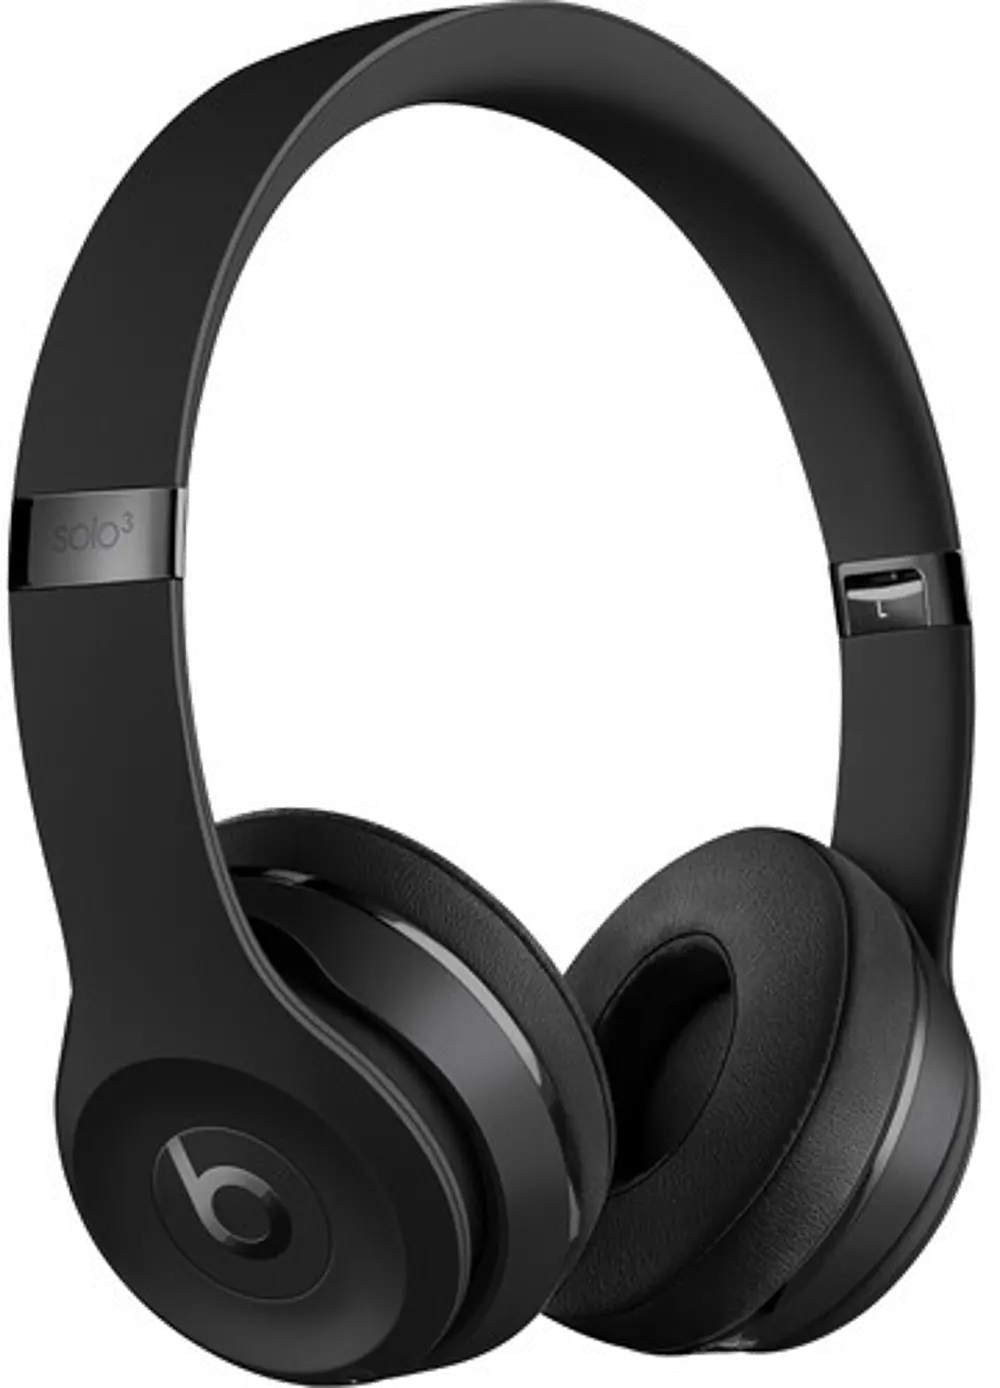 MX432LL/A Beats Solo 3 Wireless On-Ear Headphones - Black-1